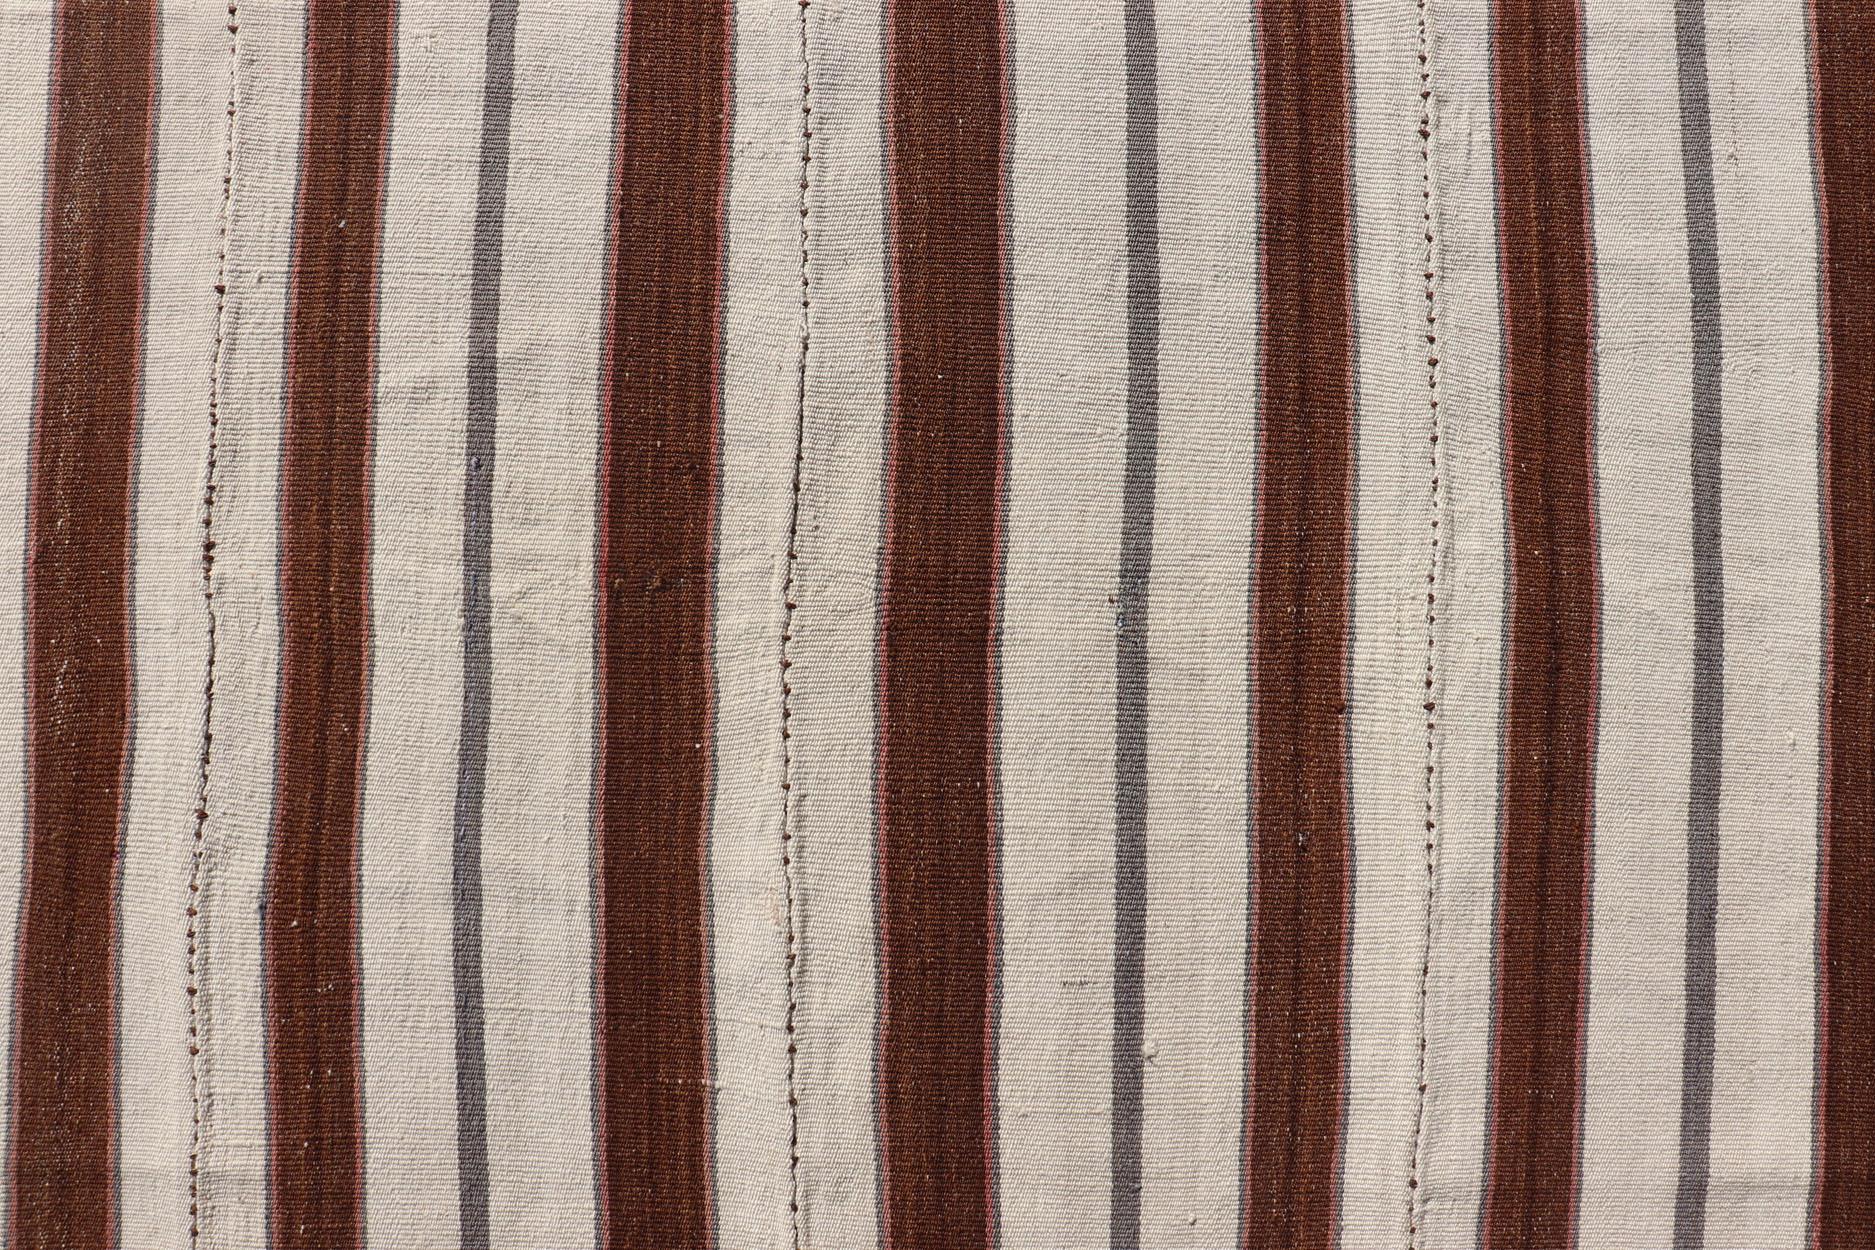 Measures: 5'6 x 7'2 
Square Hand Woven Vintage Turkish Kilim Rug with Stripes in White & Brown. Keivan Woven Arts / Rug EN-14191, country of origin / type: Turkey / Kilim, circa 1950.

This vintage flat-woven Kilim features a minimalist design